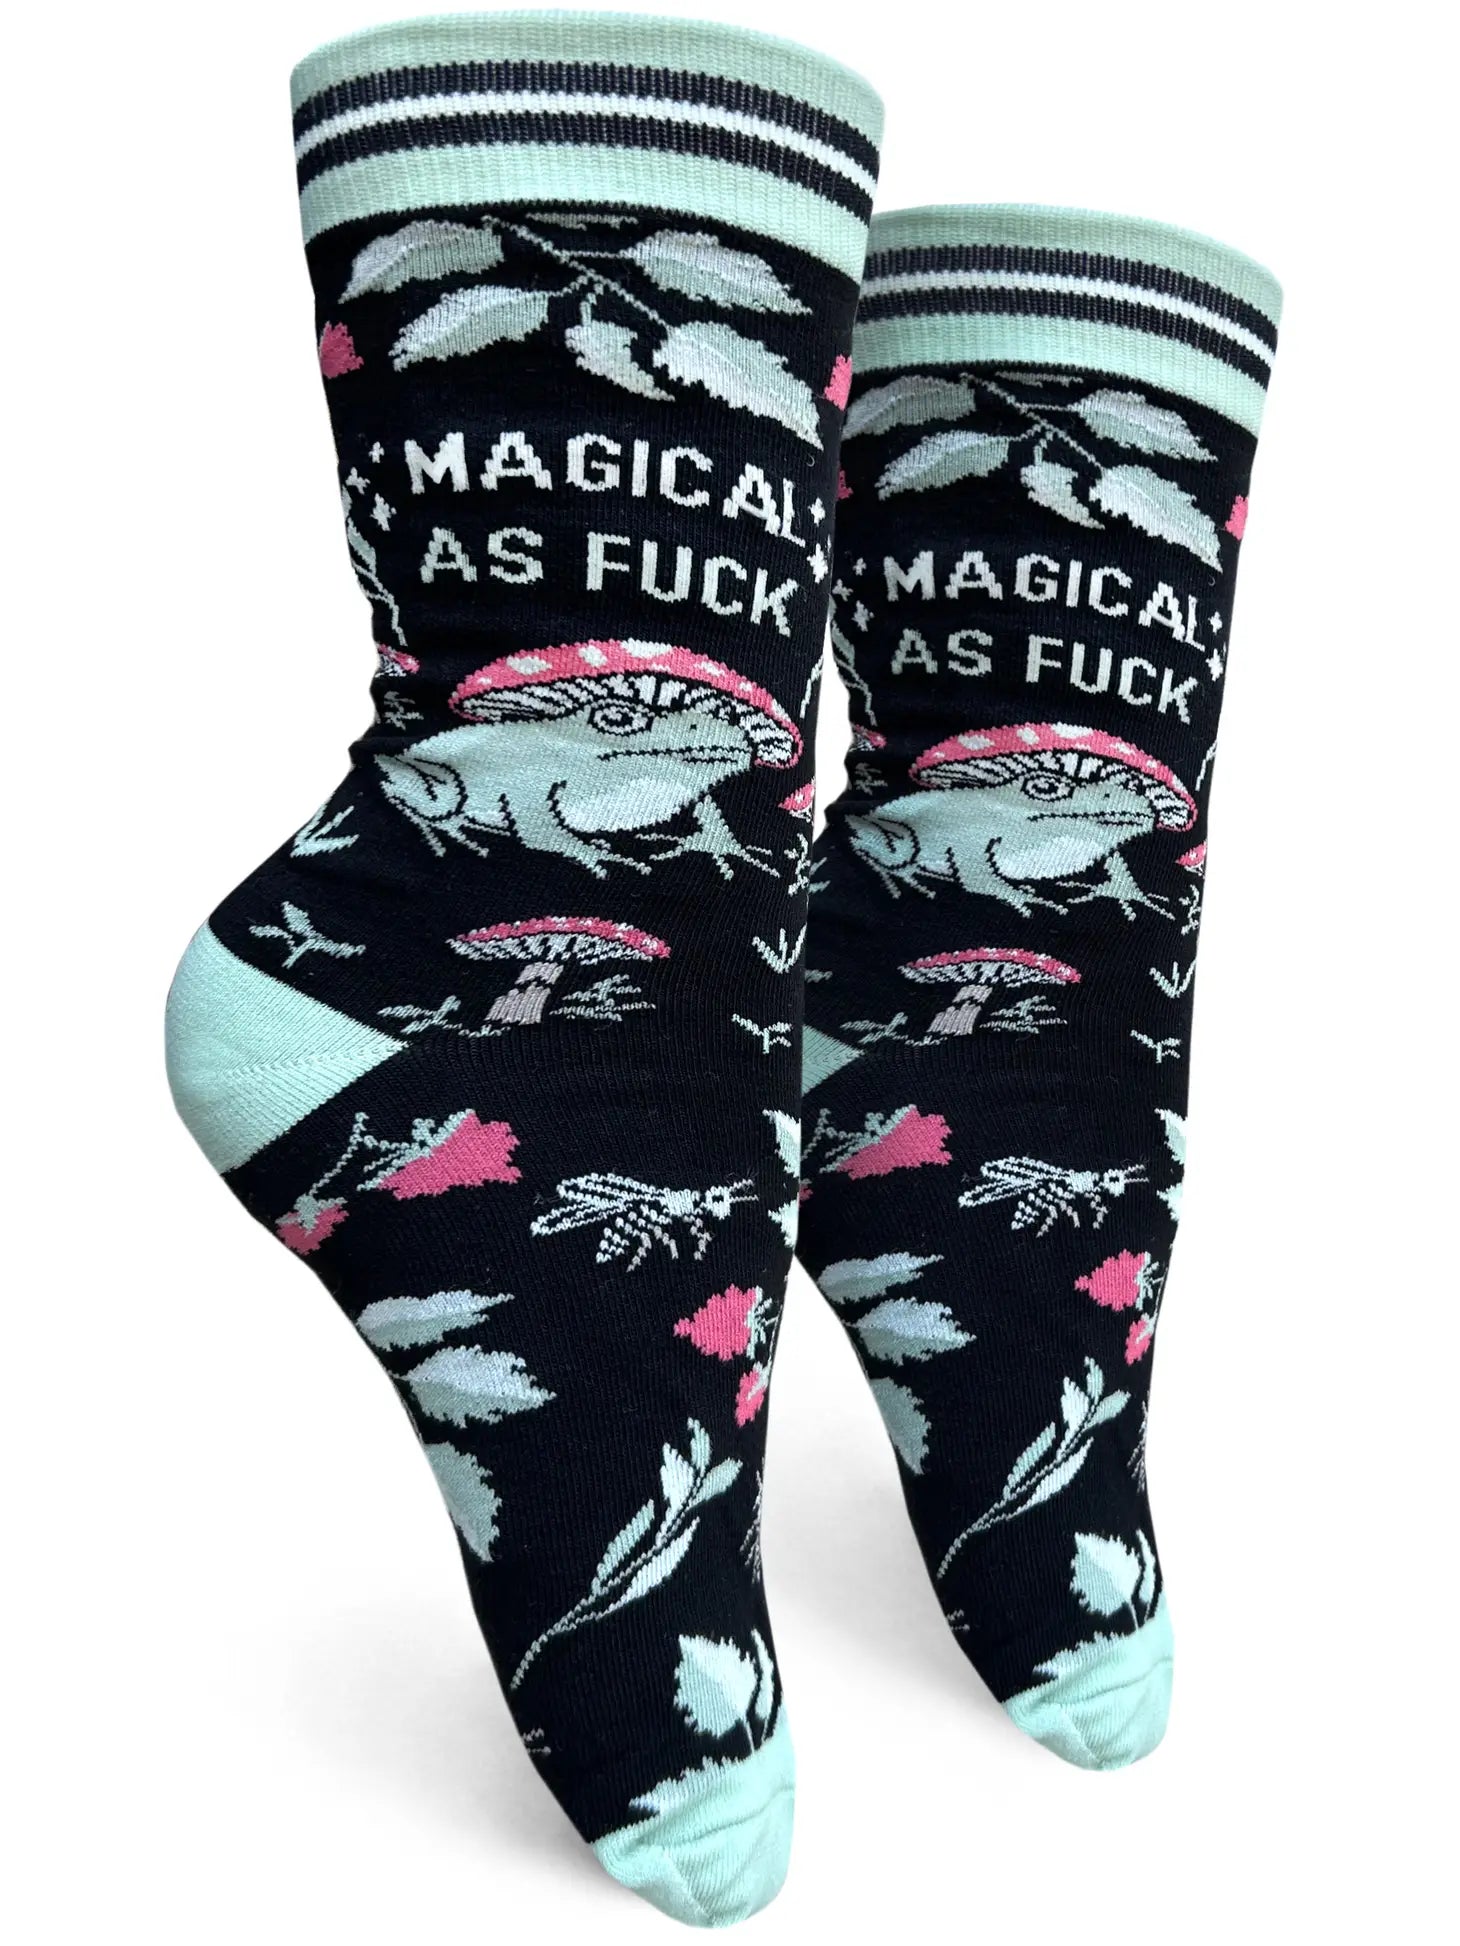 Magical As Fuck Socks